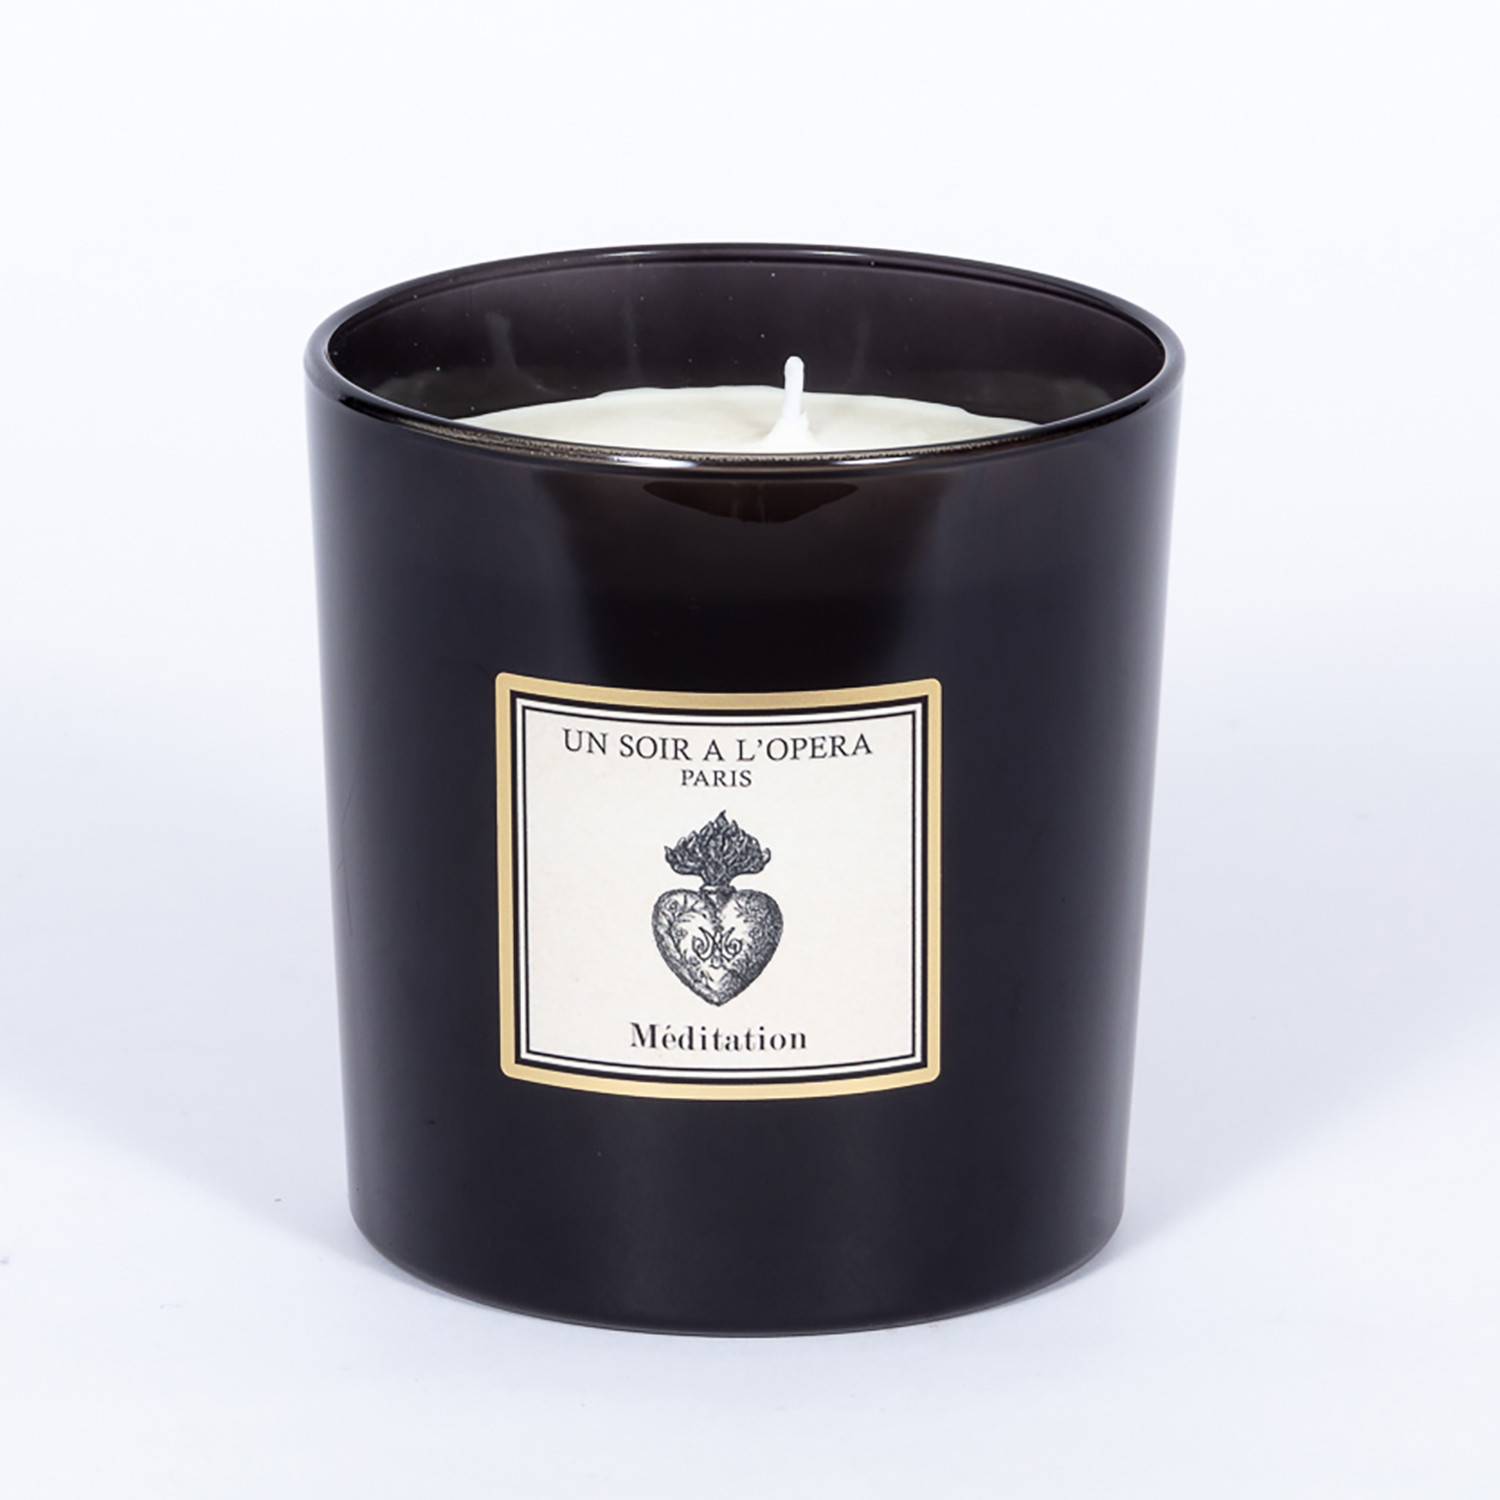 MEDITATION - Luxury scented candle 500g - Franckincense Resin & benzoin - 2 units minimum